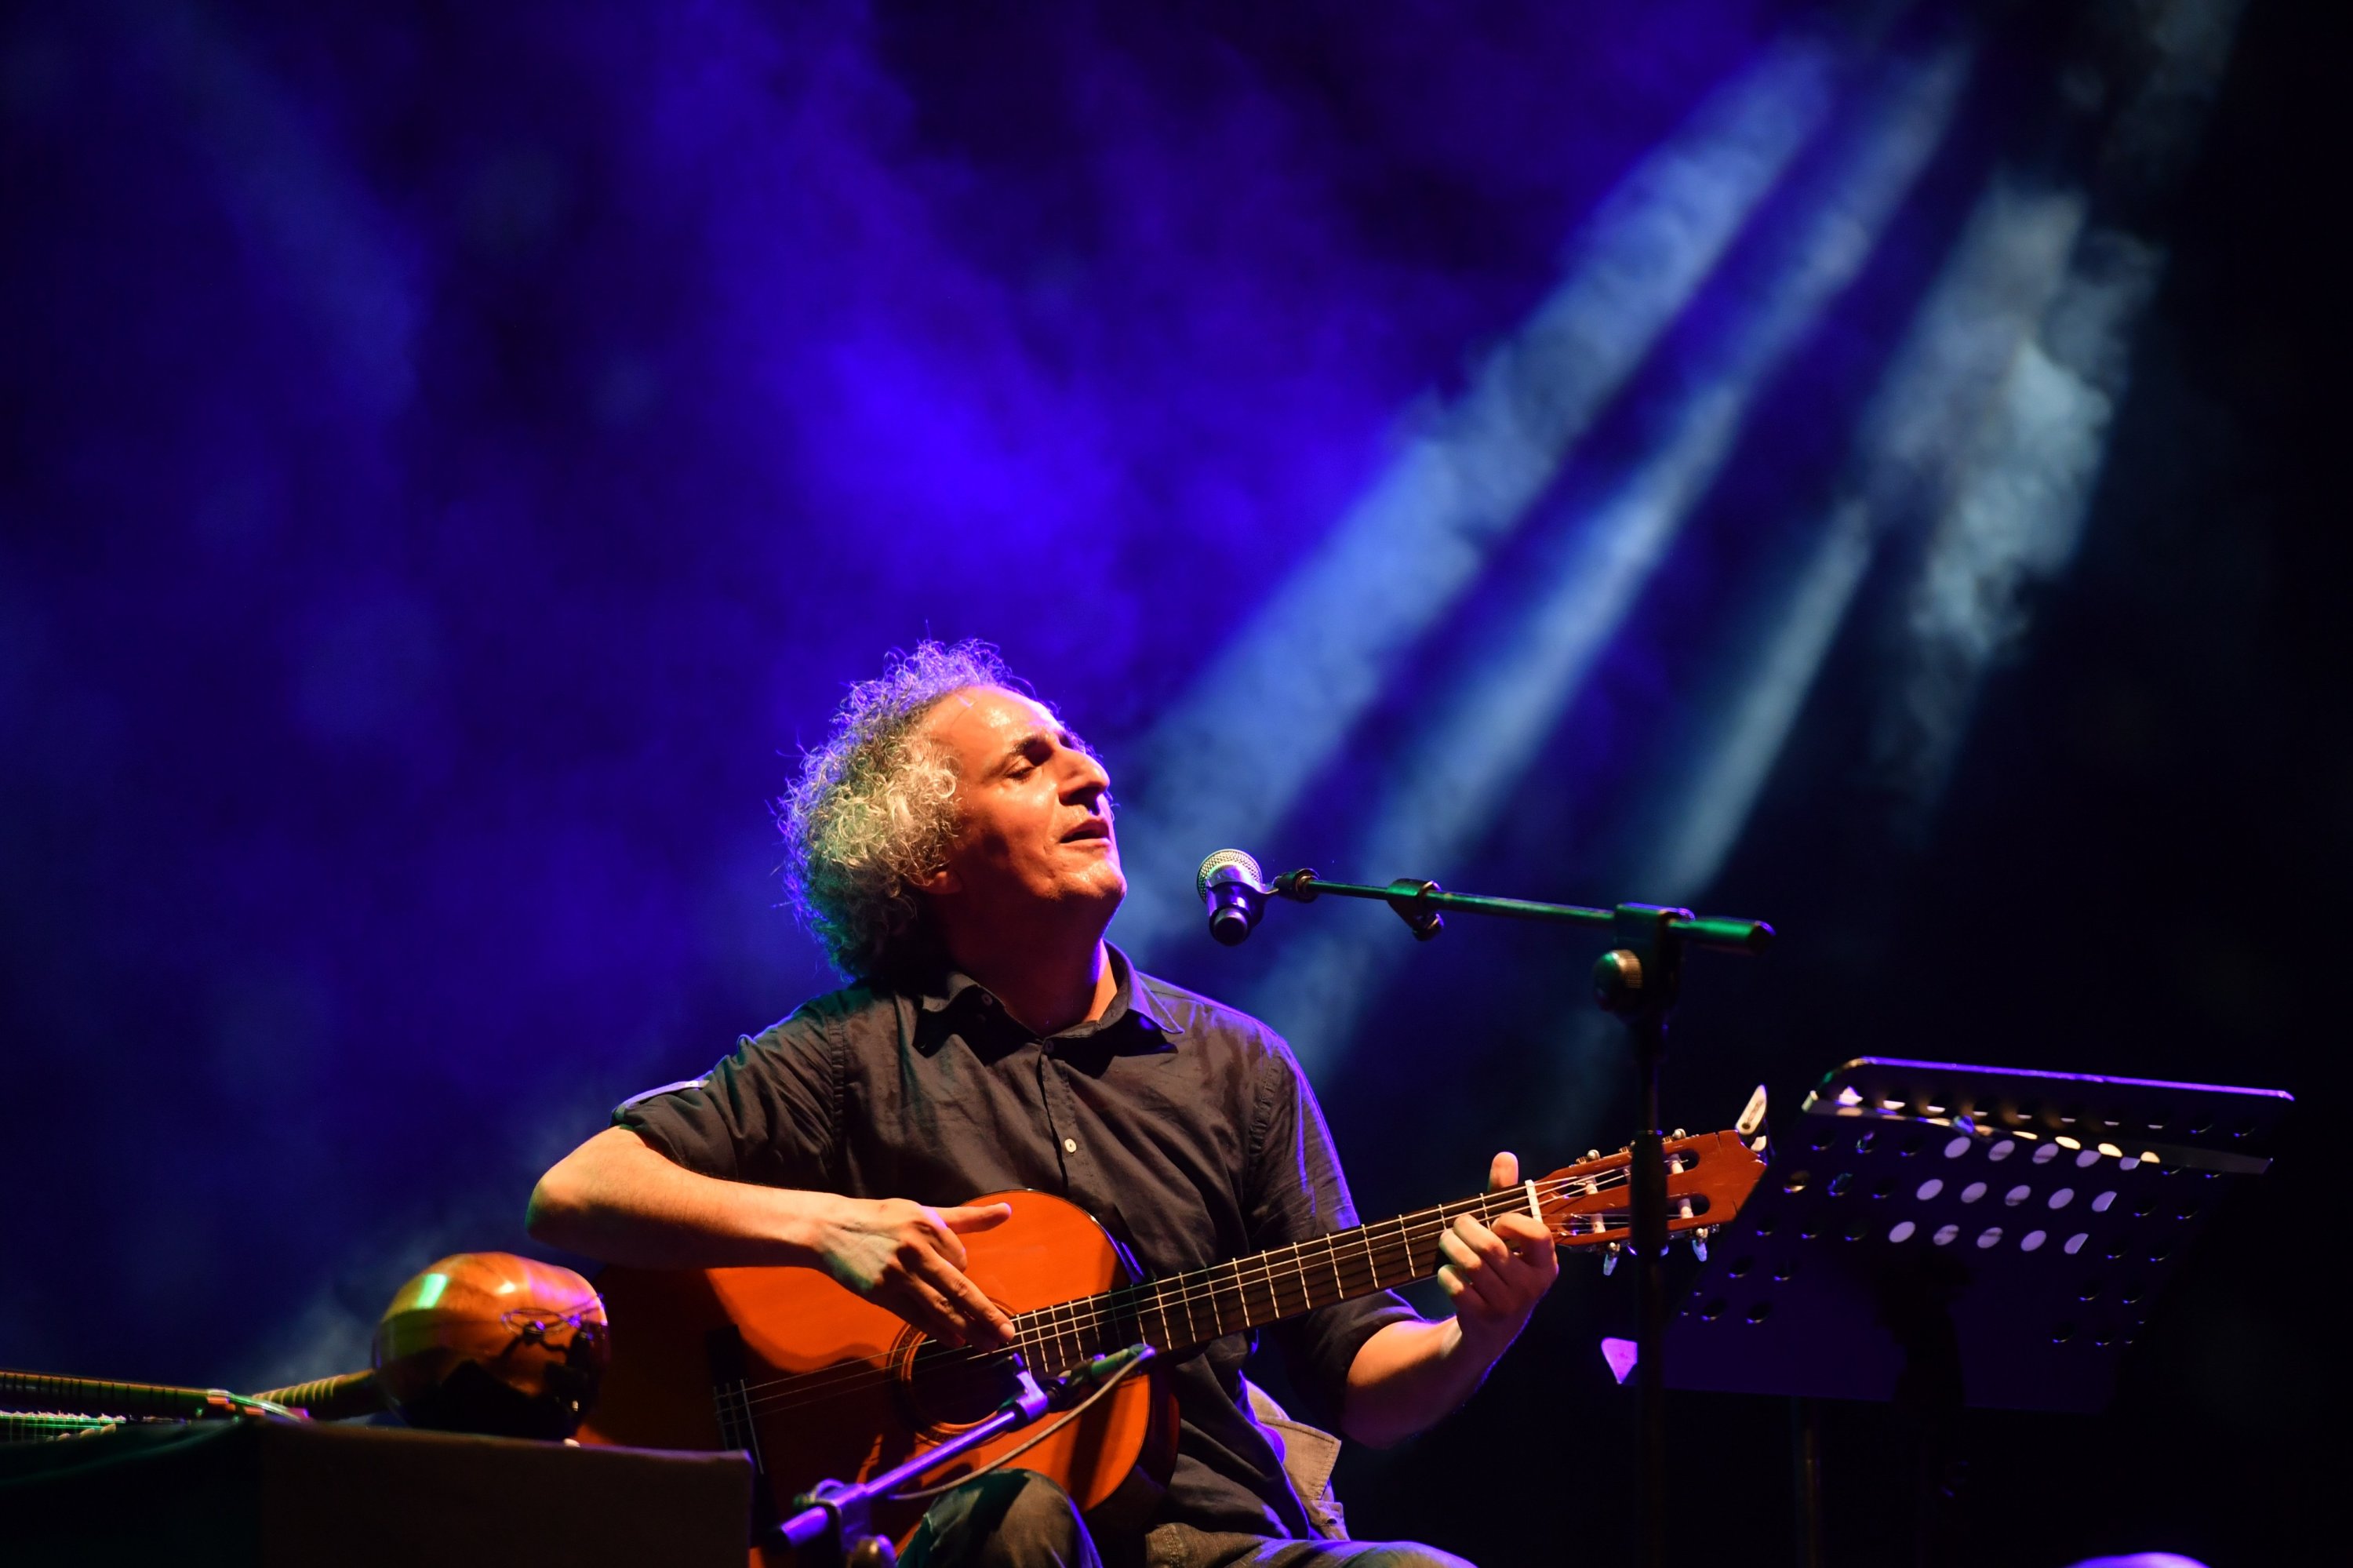 Mohsen Namjo, Iran's Bob Dylan, to give 5 concerts in Türkiye Daily Sabah